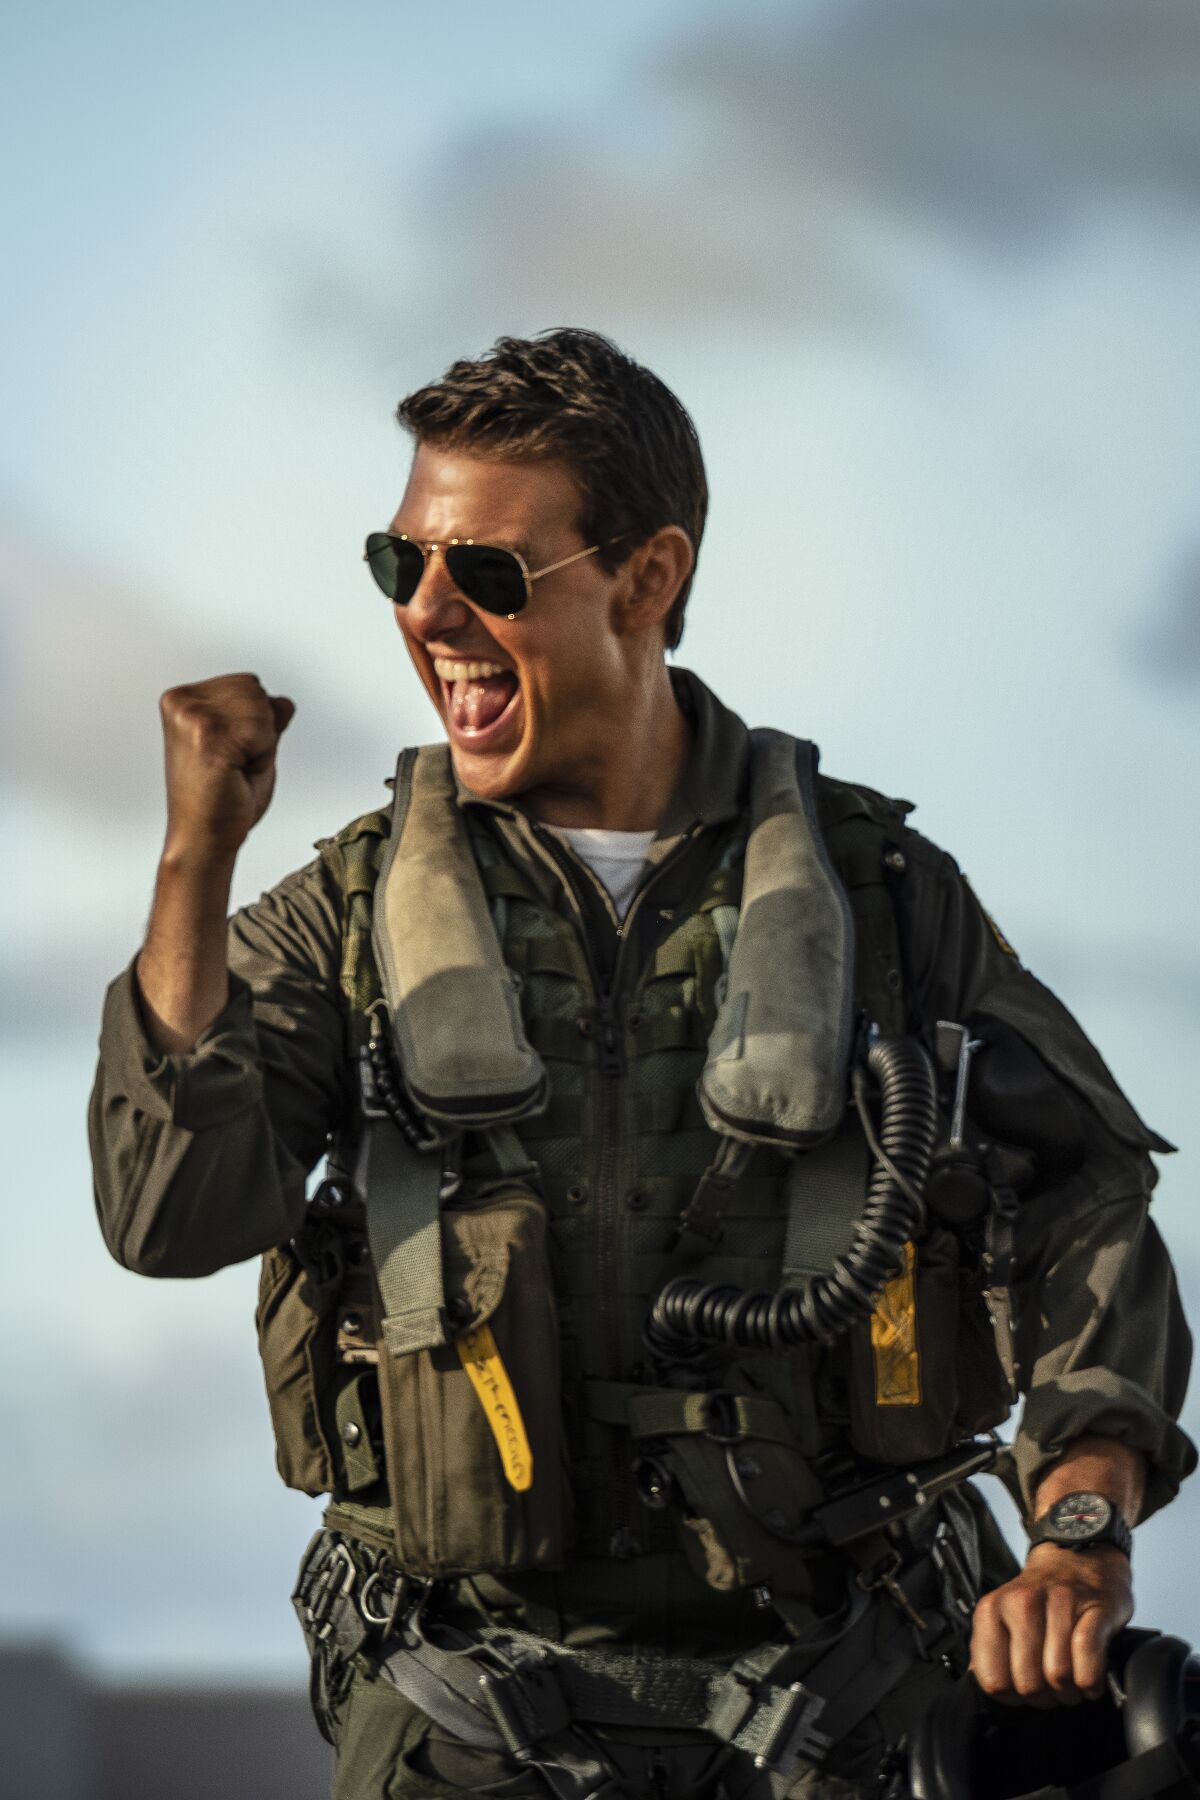 Tom Cruise raises a fist in celebration in a scene from "Top Gun: Maverick"